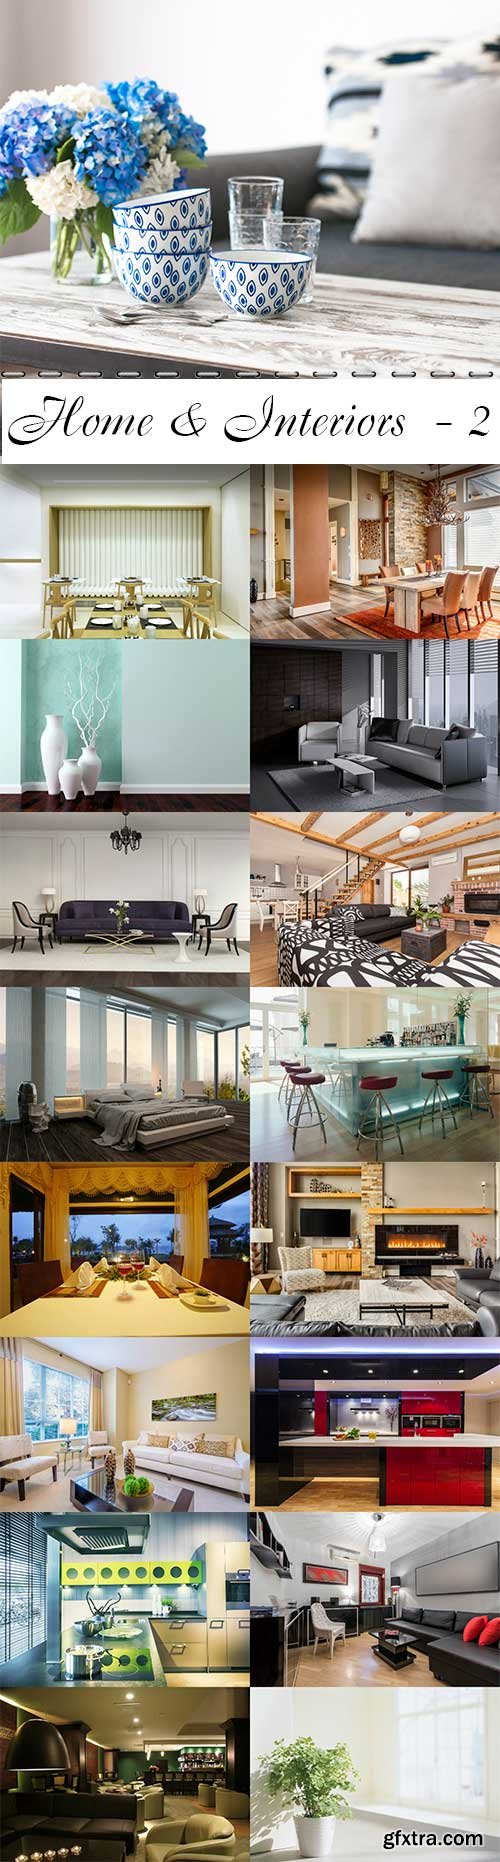 Home & Interiors - 2